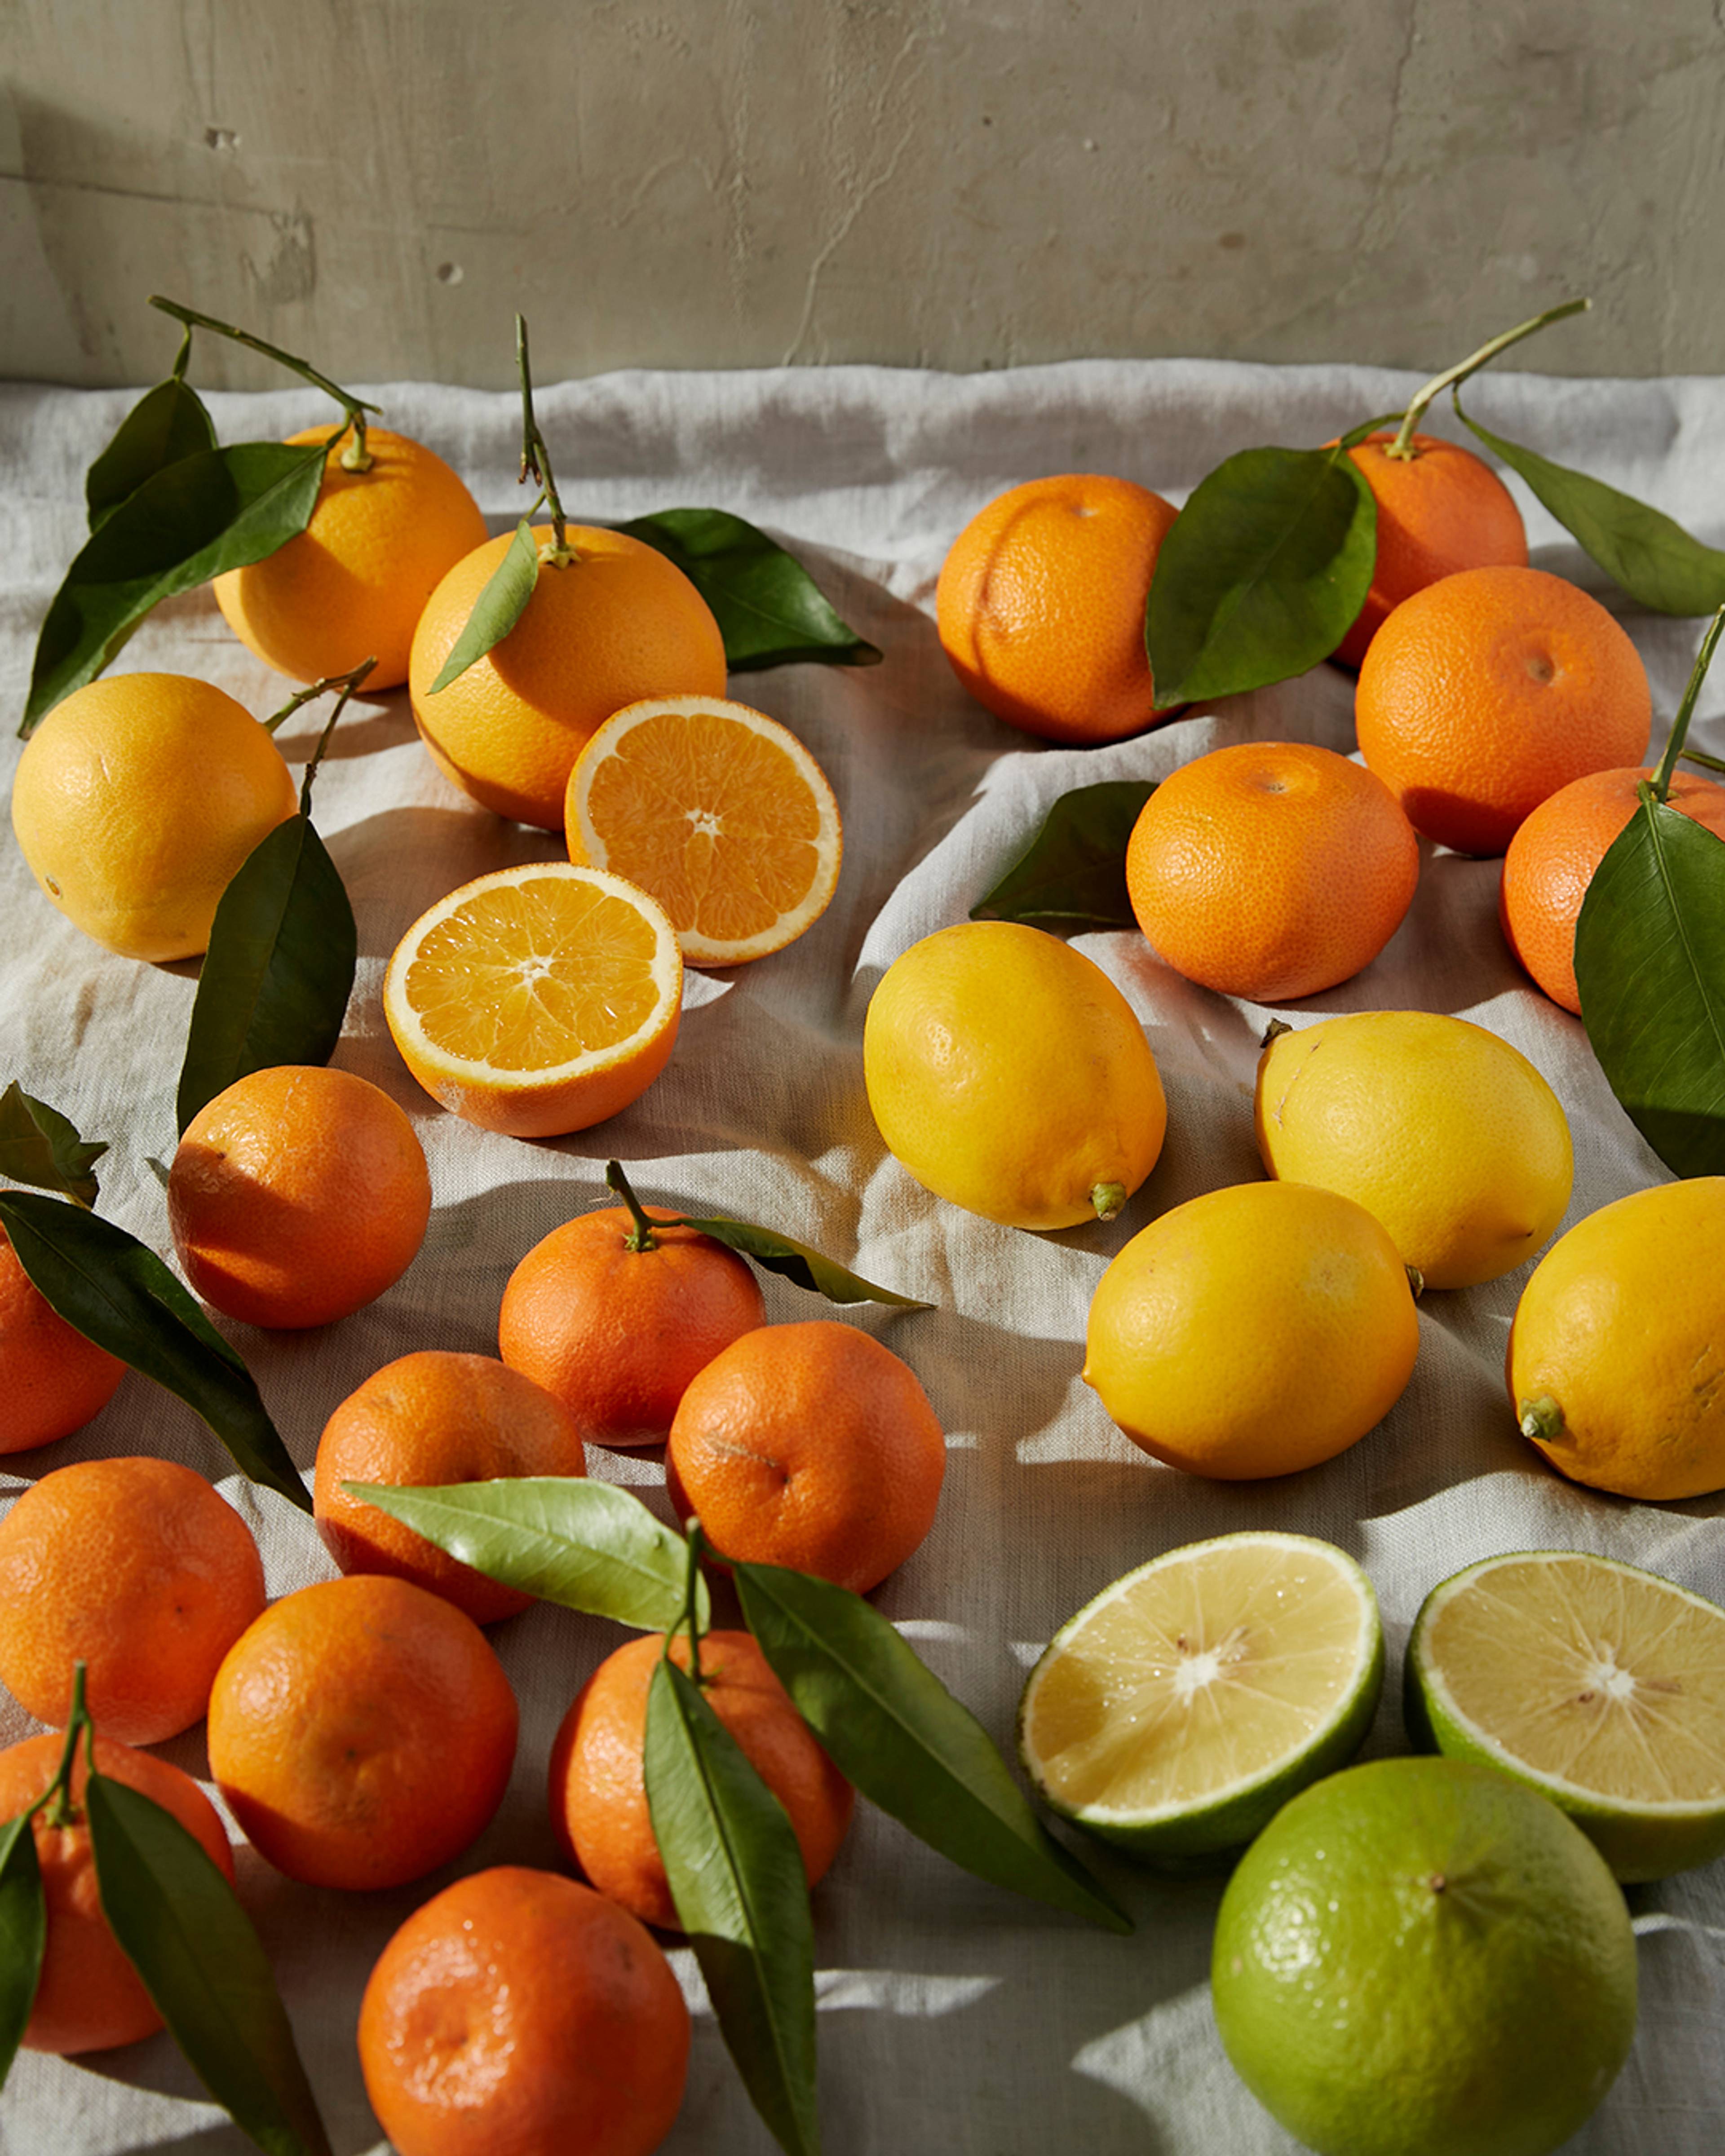 multiple leafy citrus varieties laid out on some linen